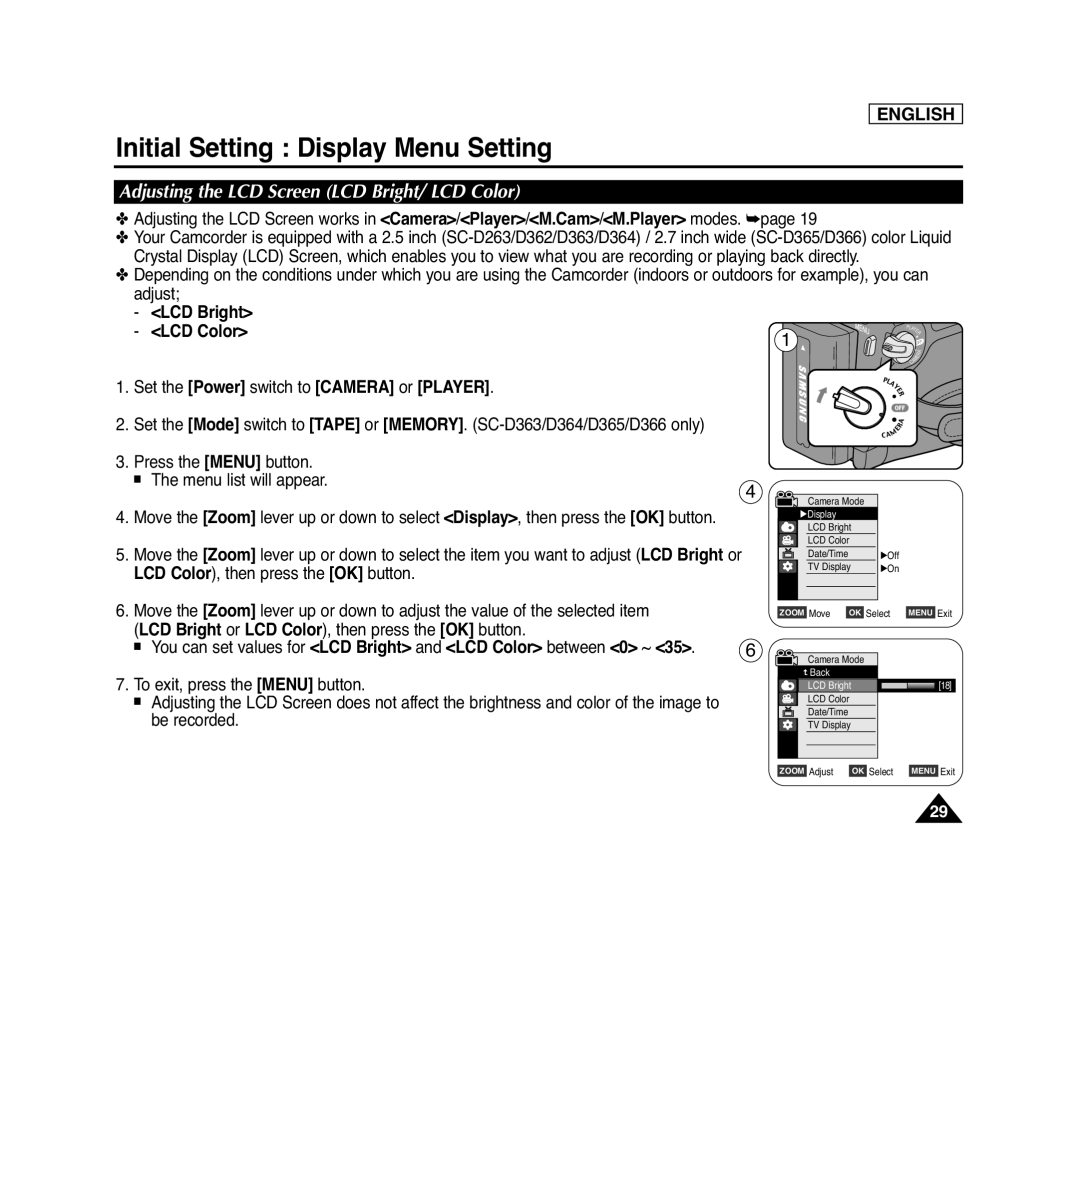 Samsung SC-D366, SC-D263 Initial Setting Display Menu Setting, Adjusting the LCD Screen LCD Bright/ LCD Color, English 